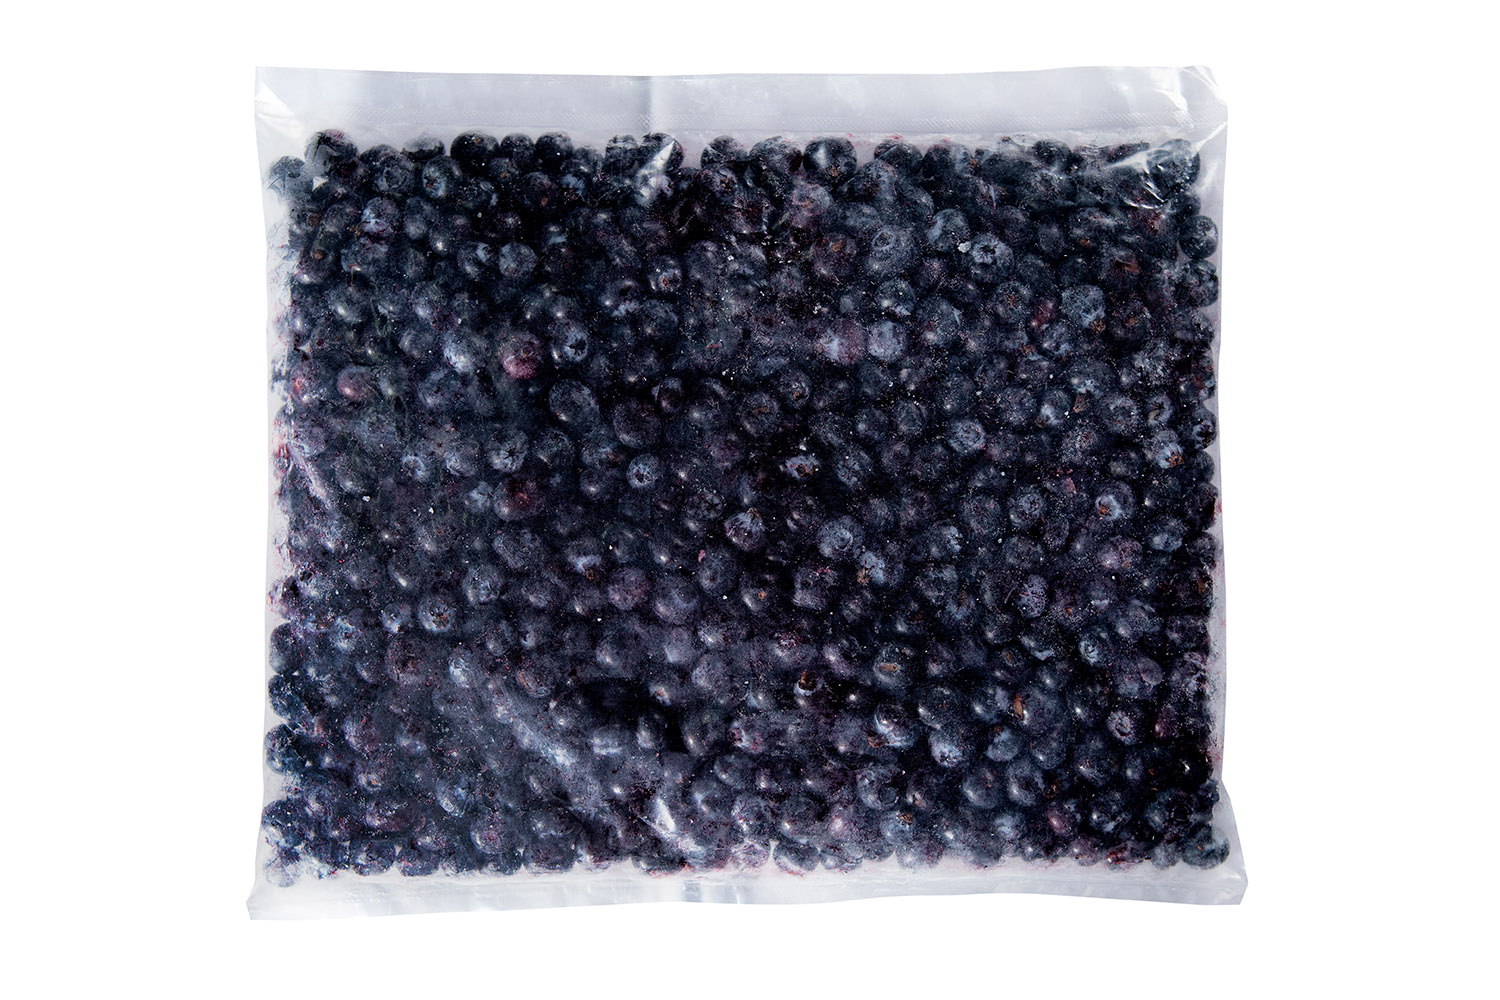 Blueberries 1 kg